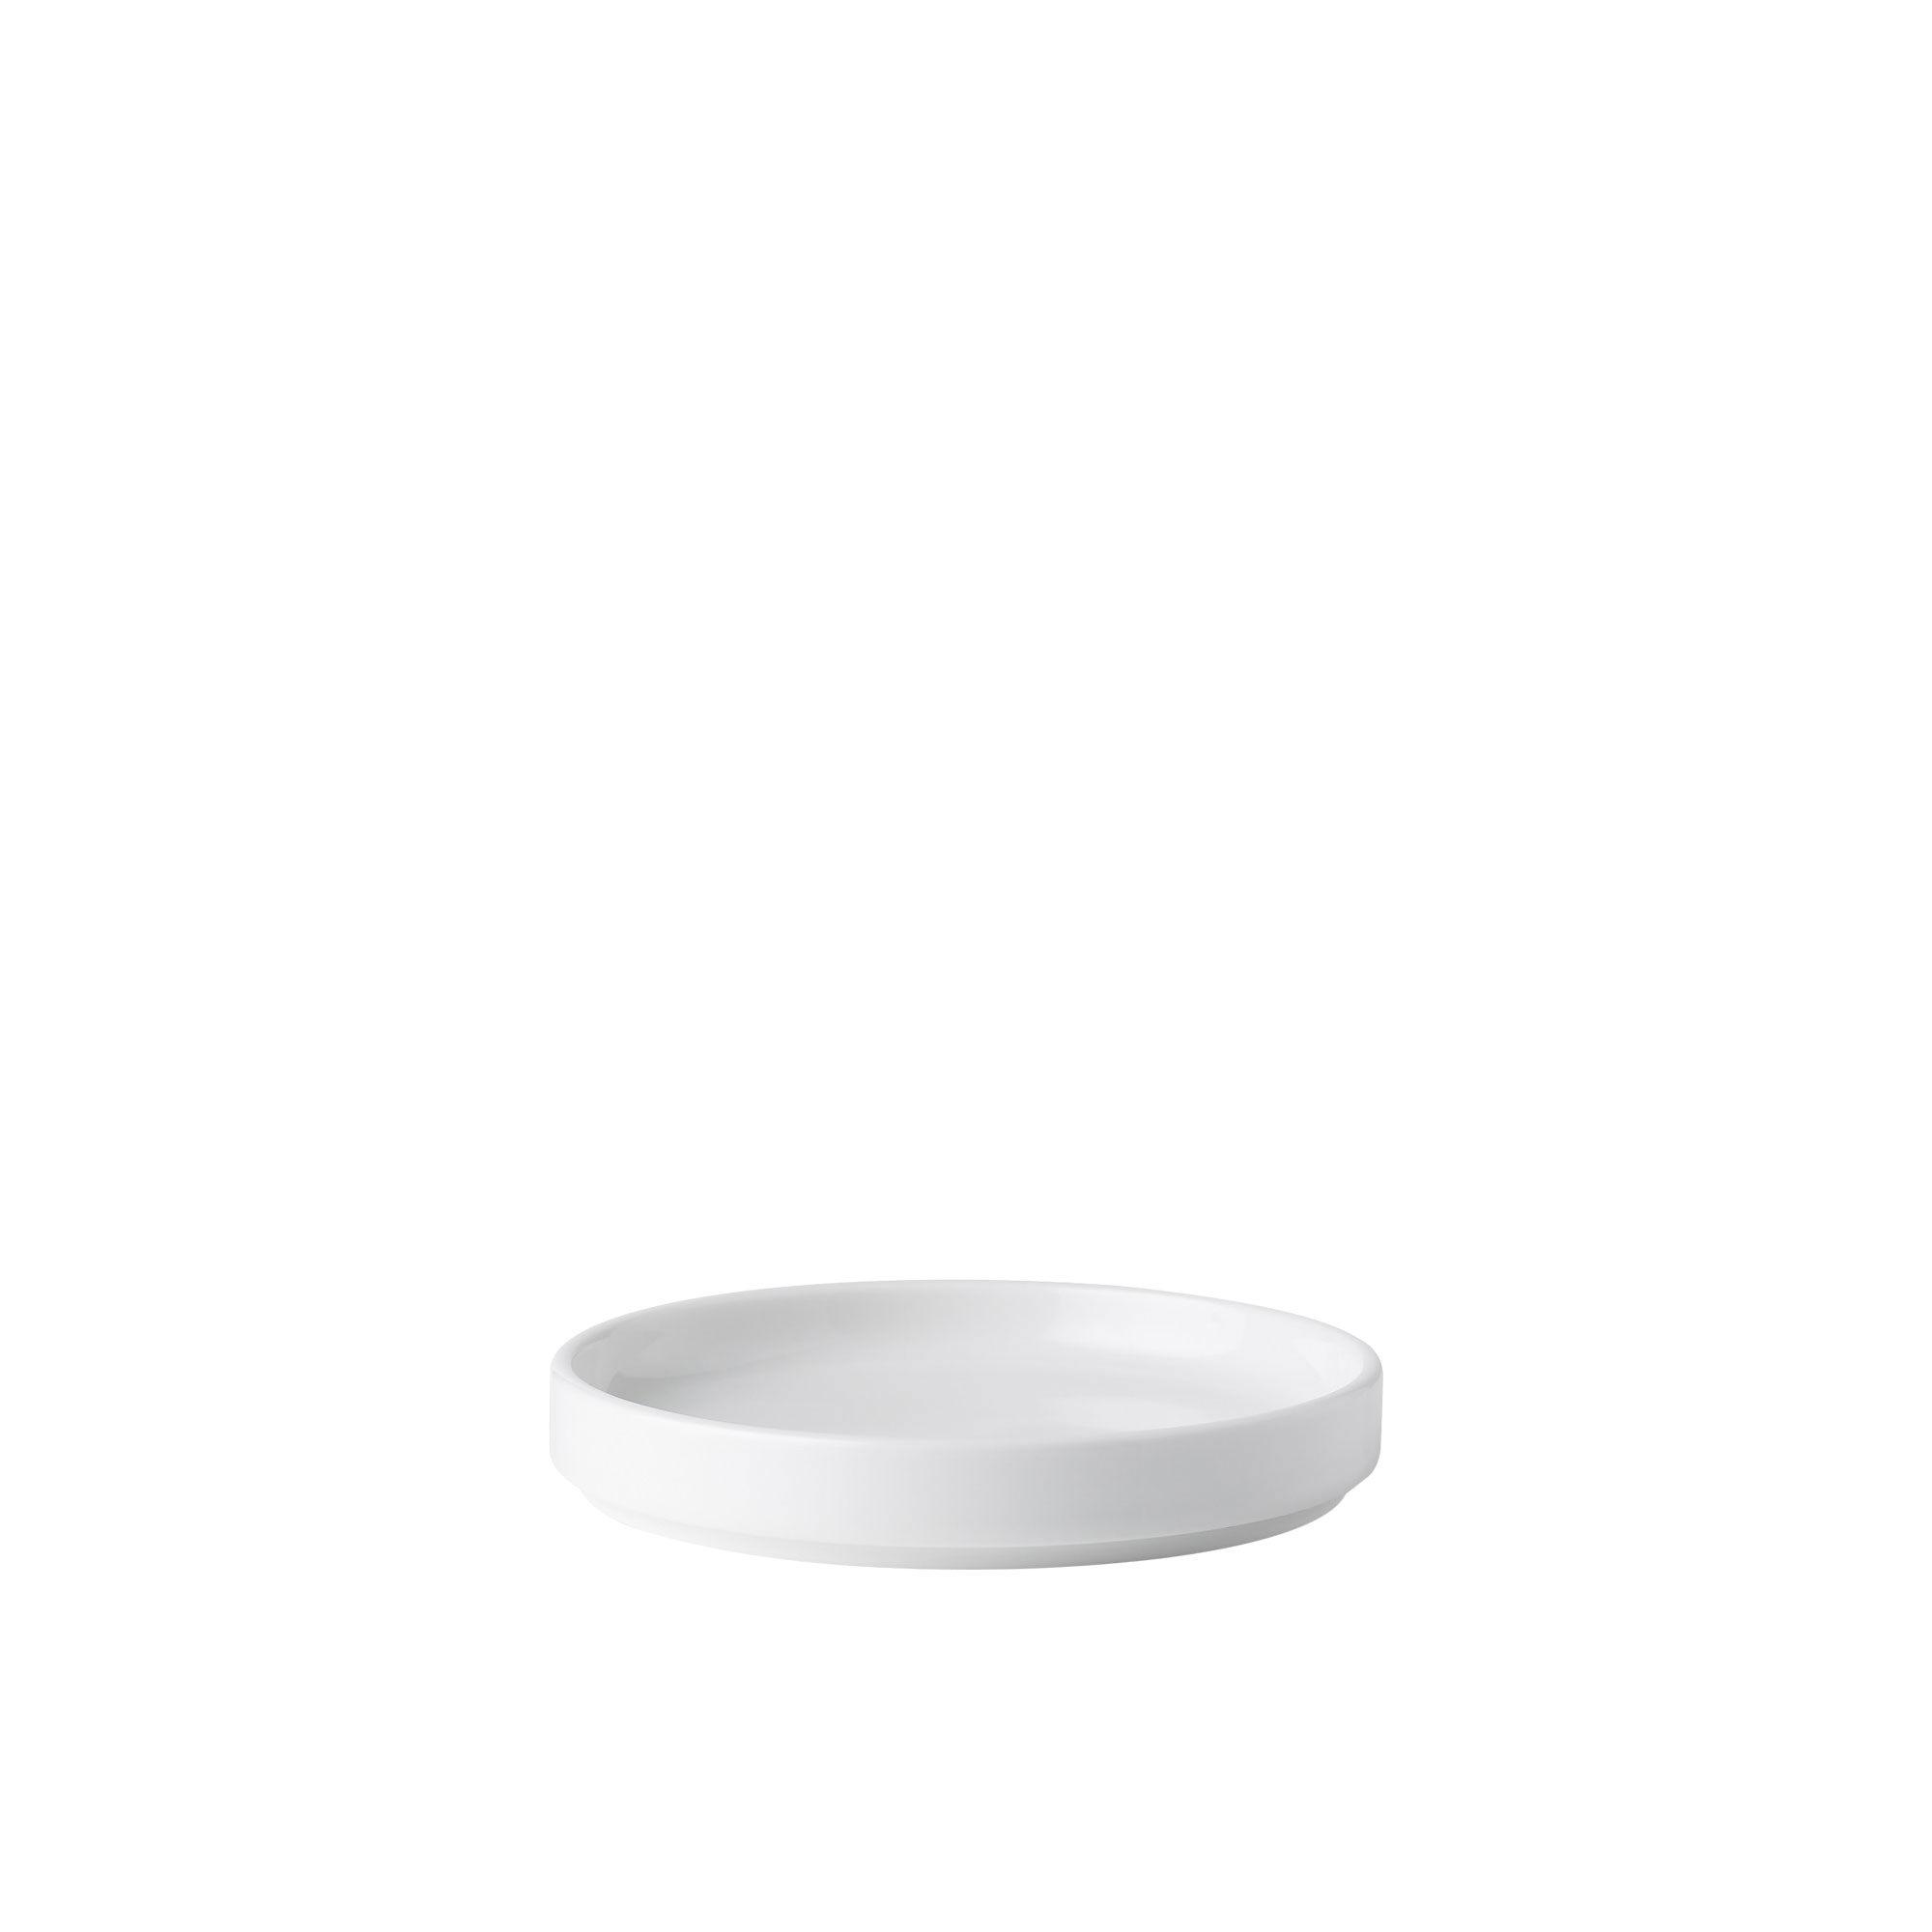 Noritake Stax White Small Plate Set of 4 Image 2